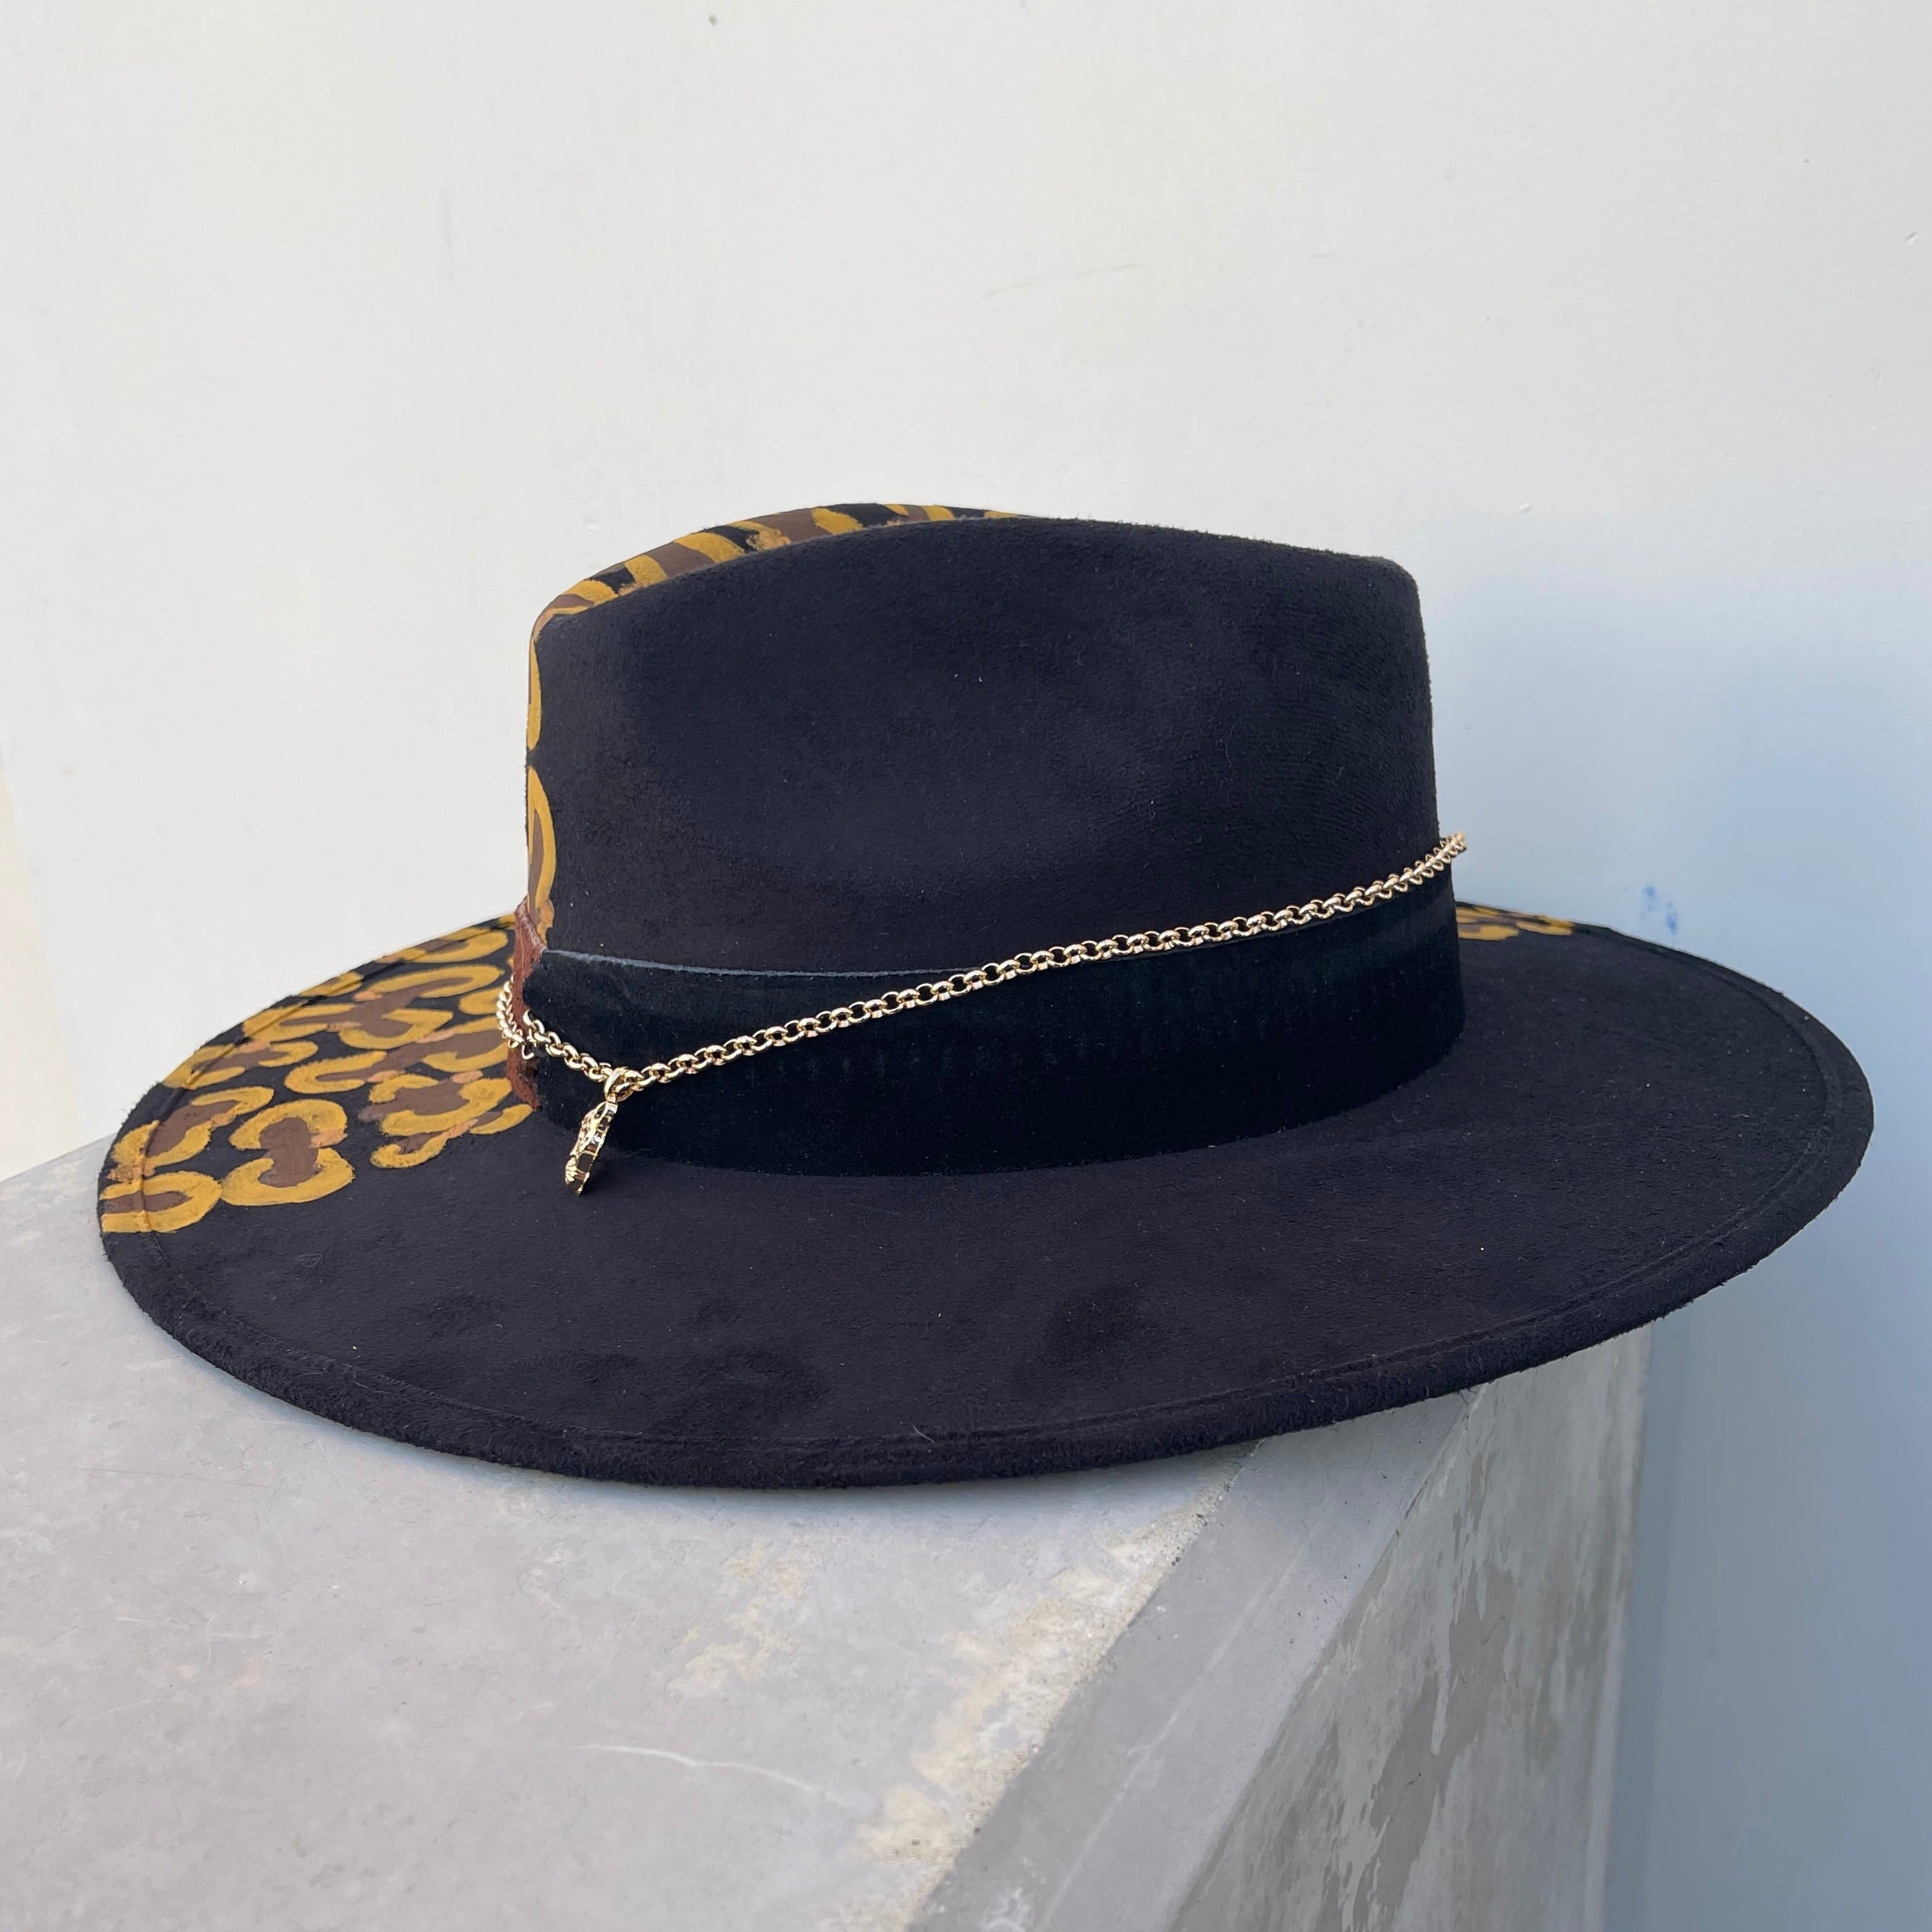 The Black Cheetah Handpainted Hat